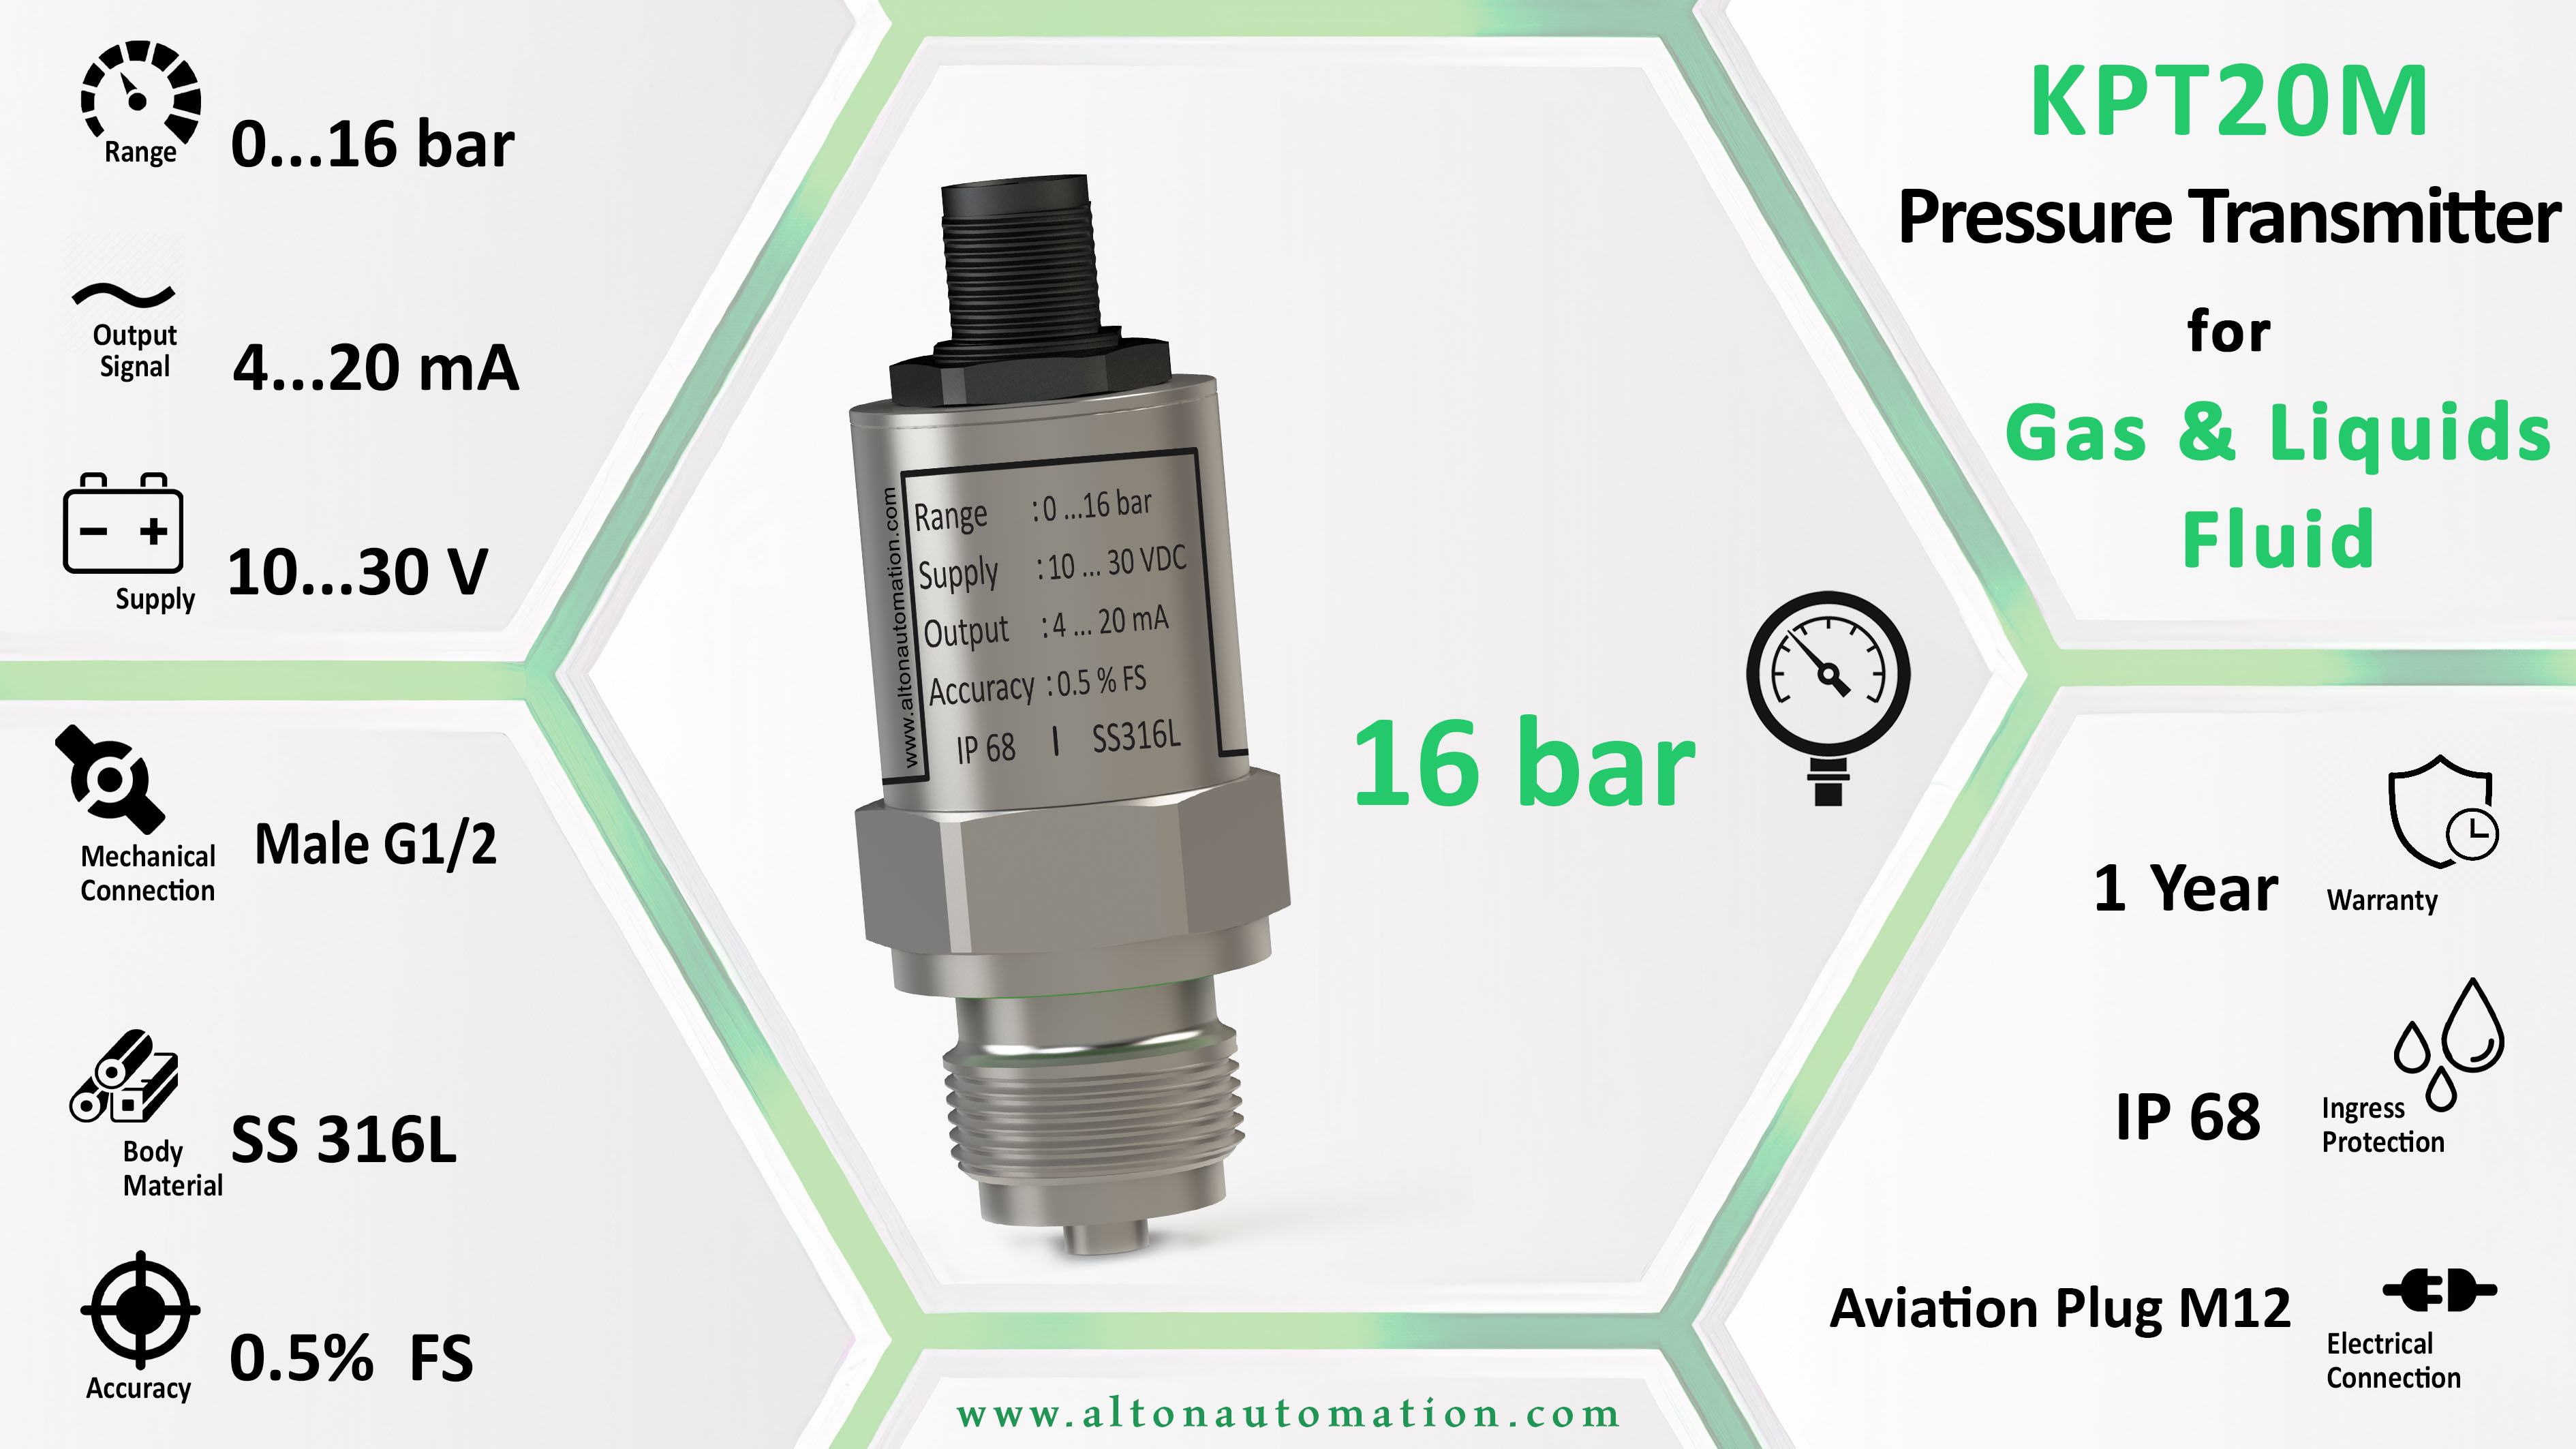 Pressure Transmitter for Gas & Liquids Fluid_KPT20M-016-C1-MG2_image_2